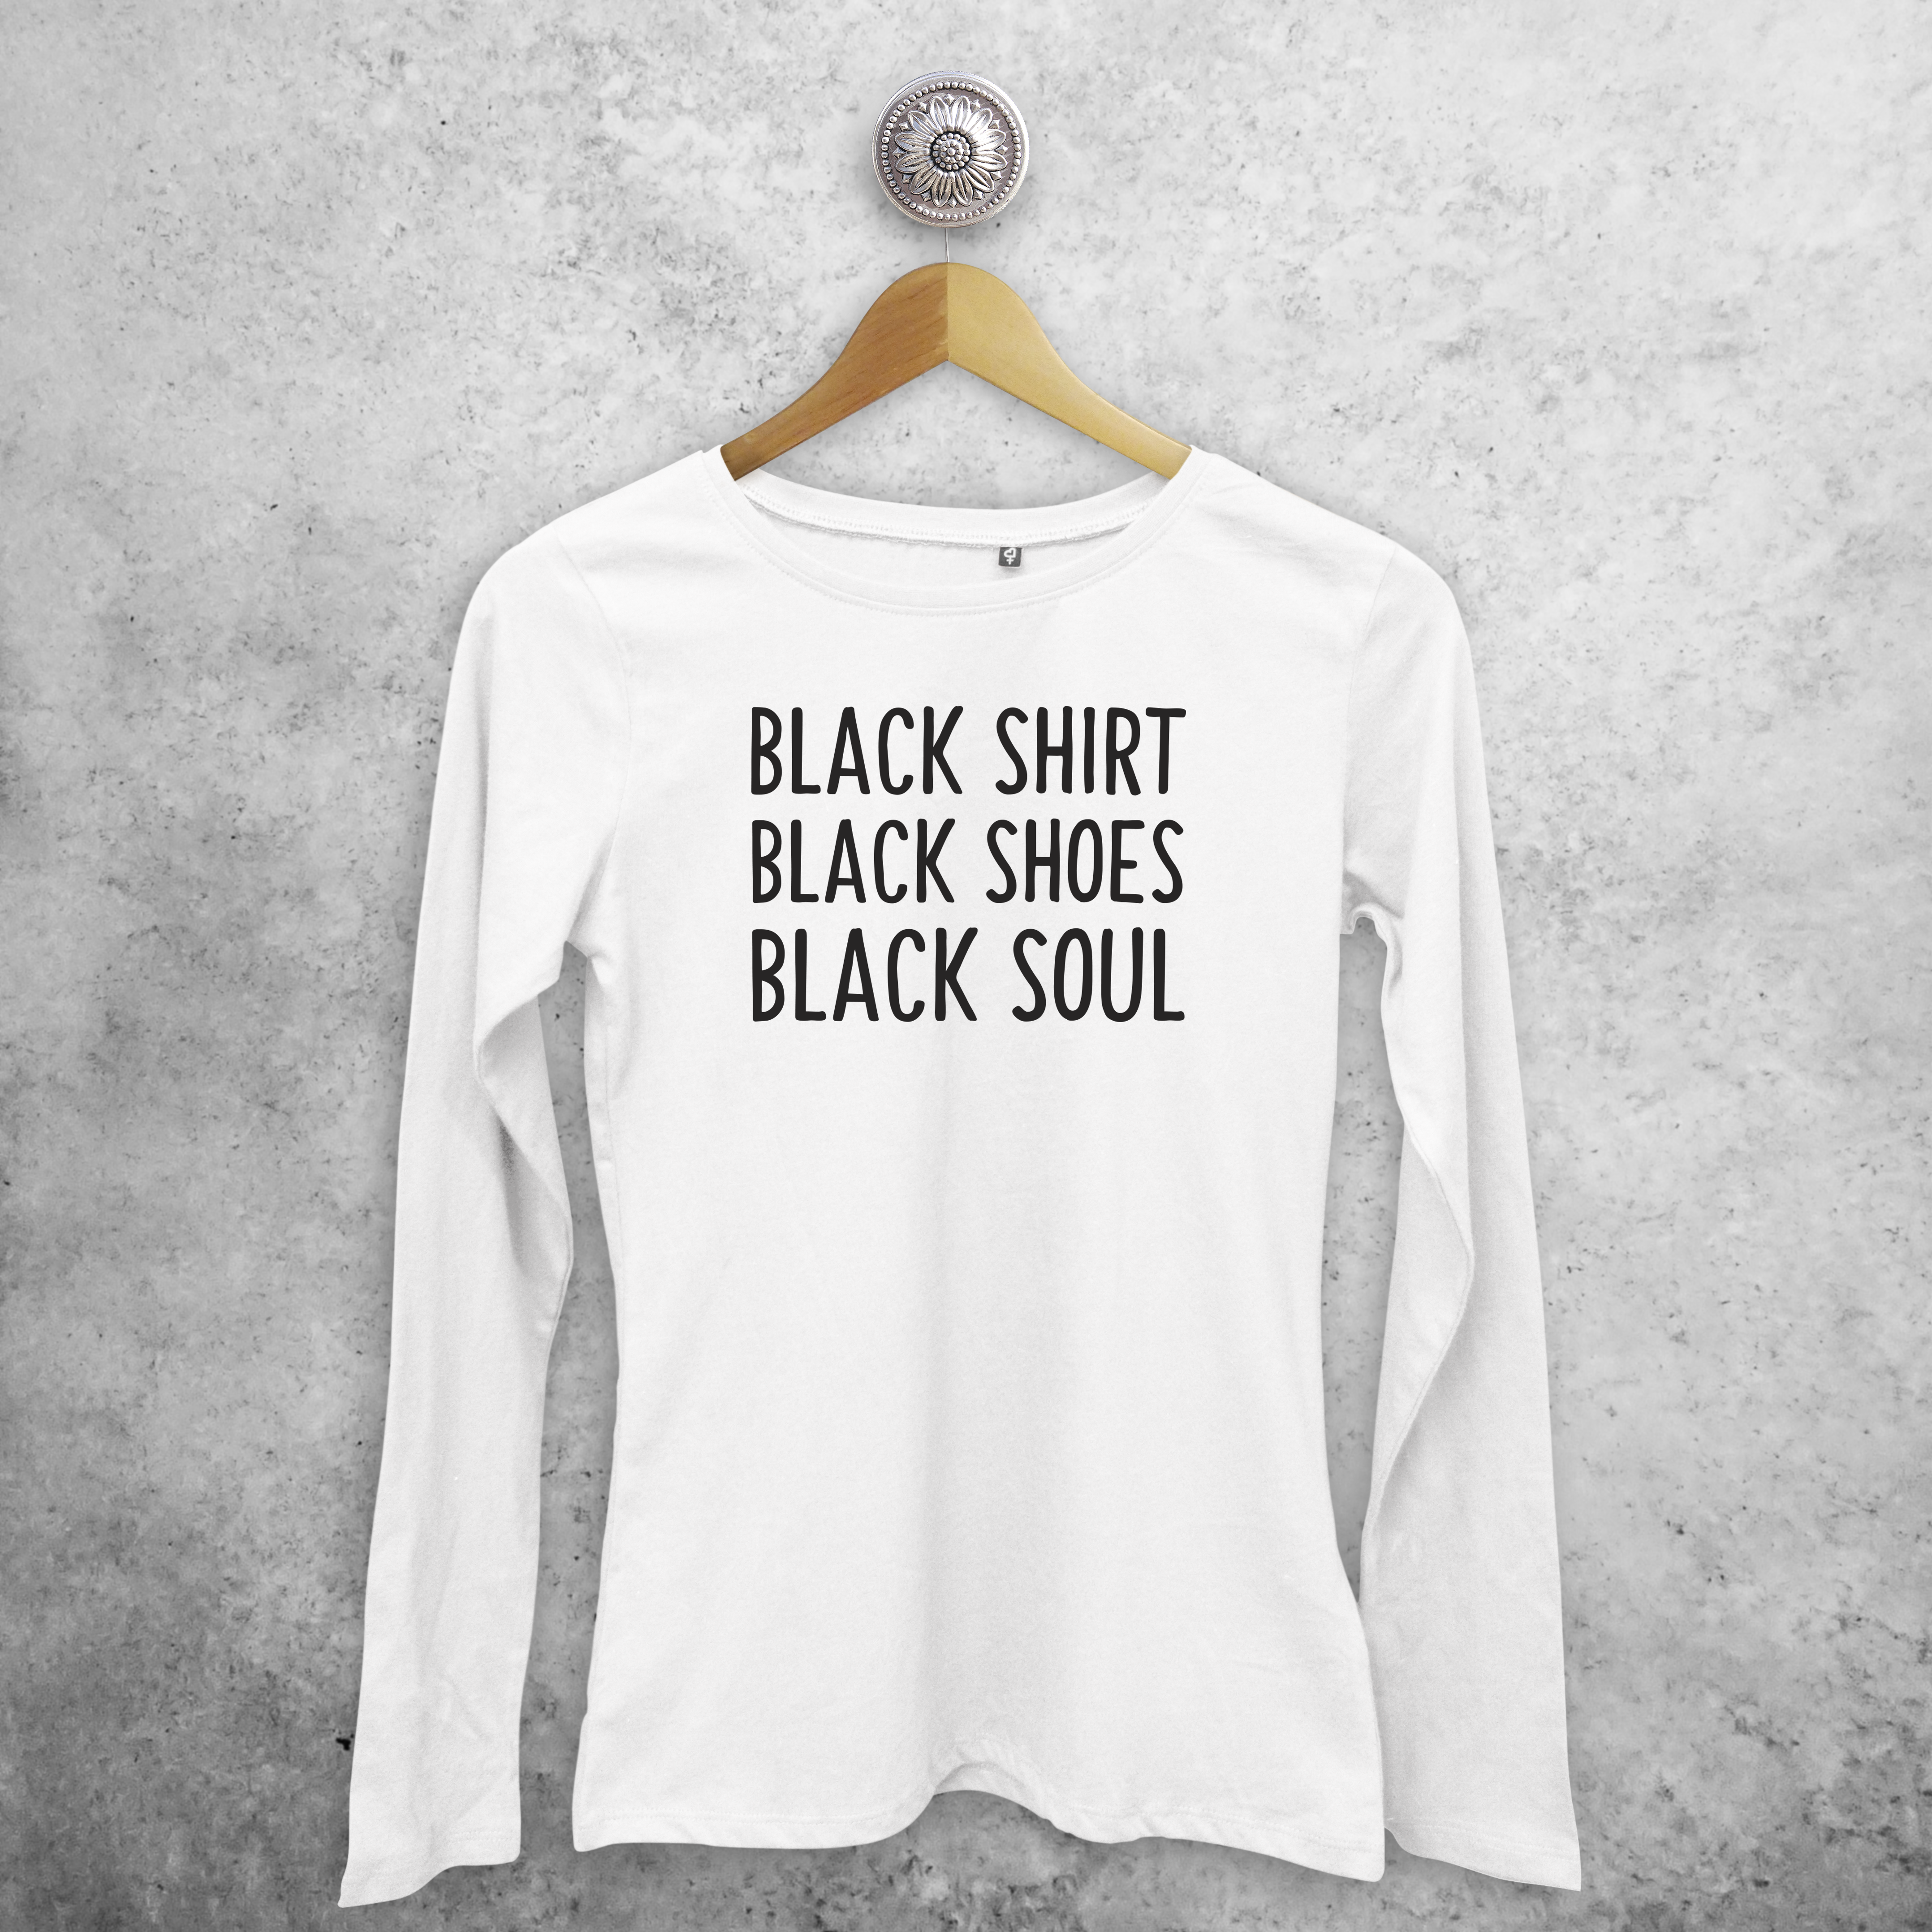 'Black shirt, Black shoes, Black soul' adult longsleeve shirt